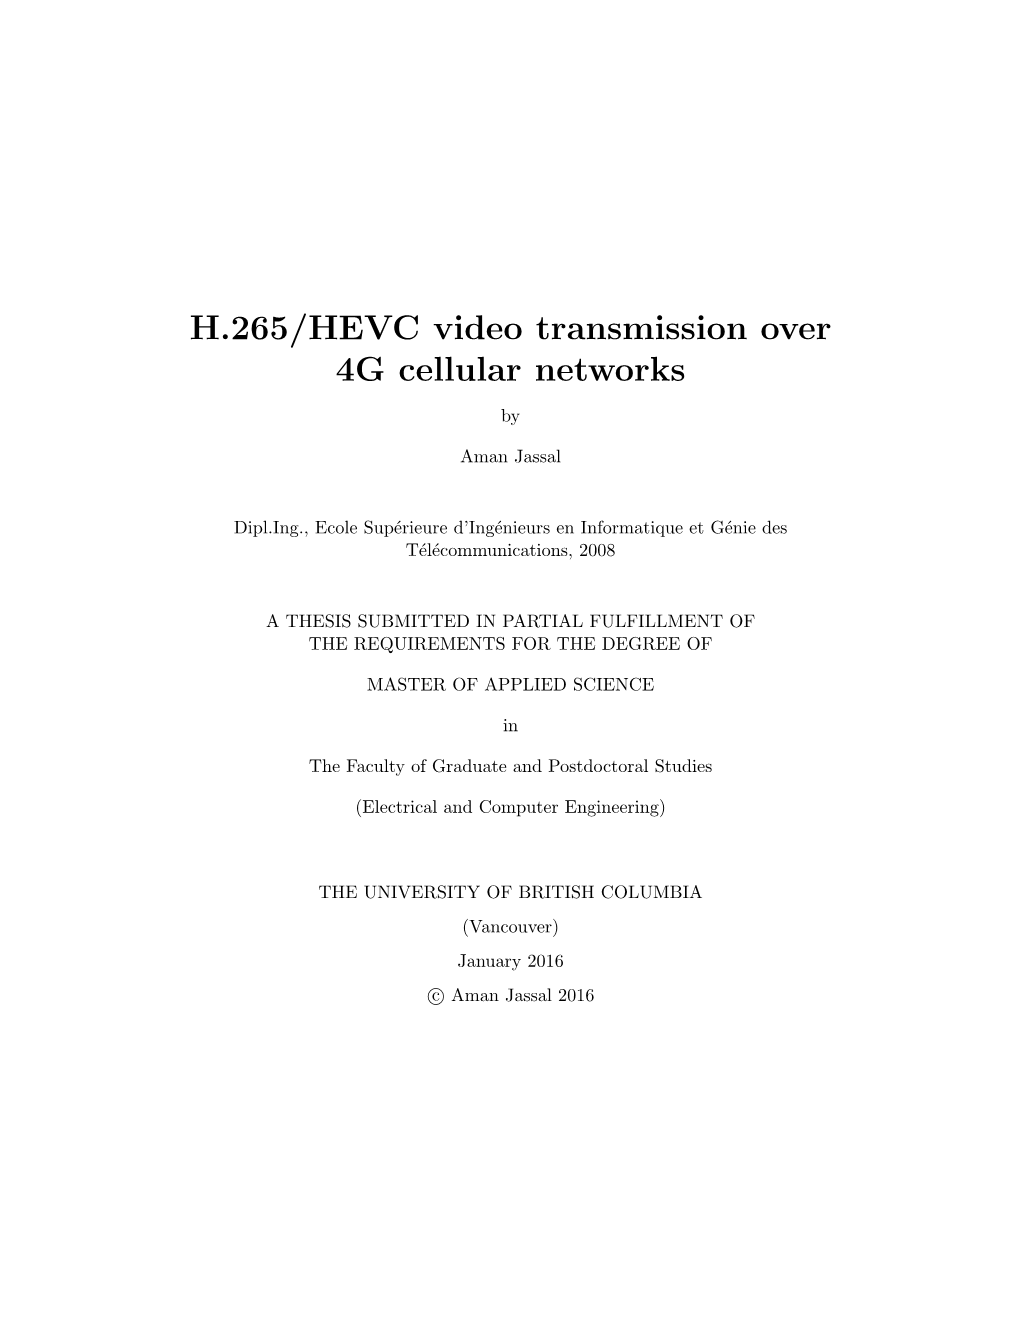 H.265/HEVC Video Transmission Over 4G Cellular Networks